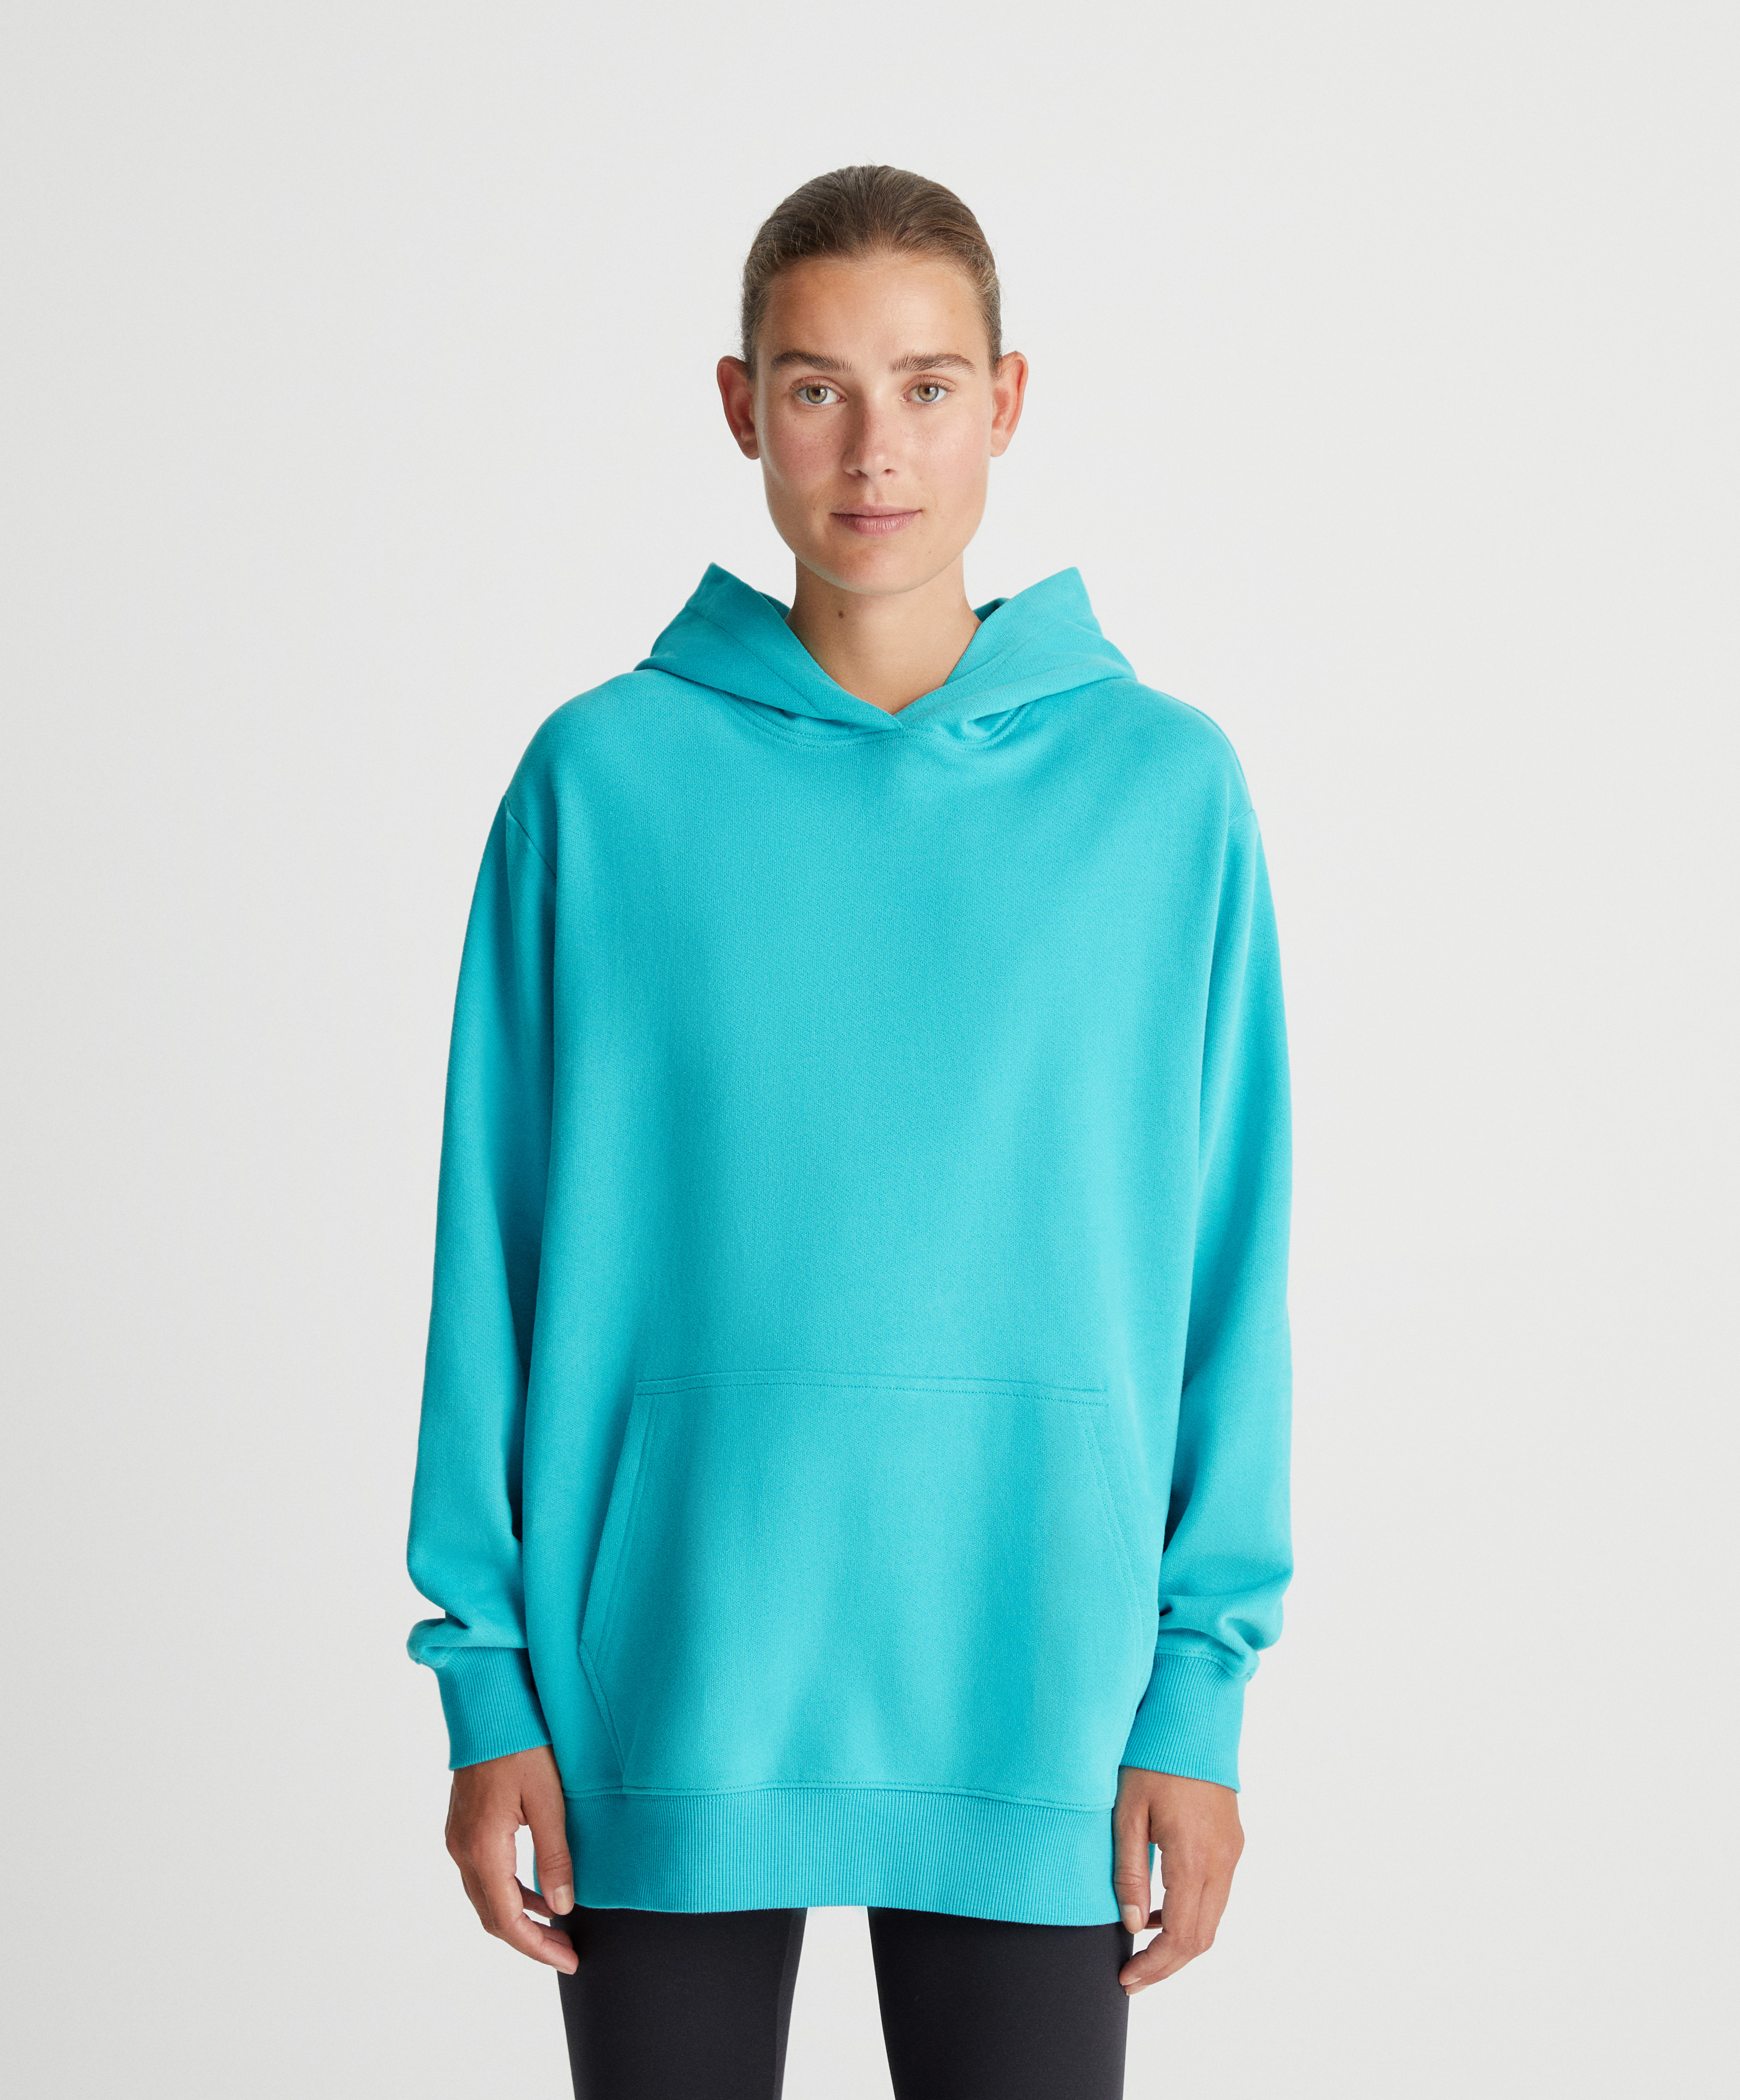 Oversize plush cotton sweatshirt